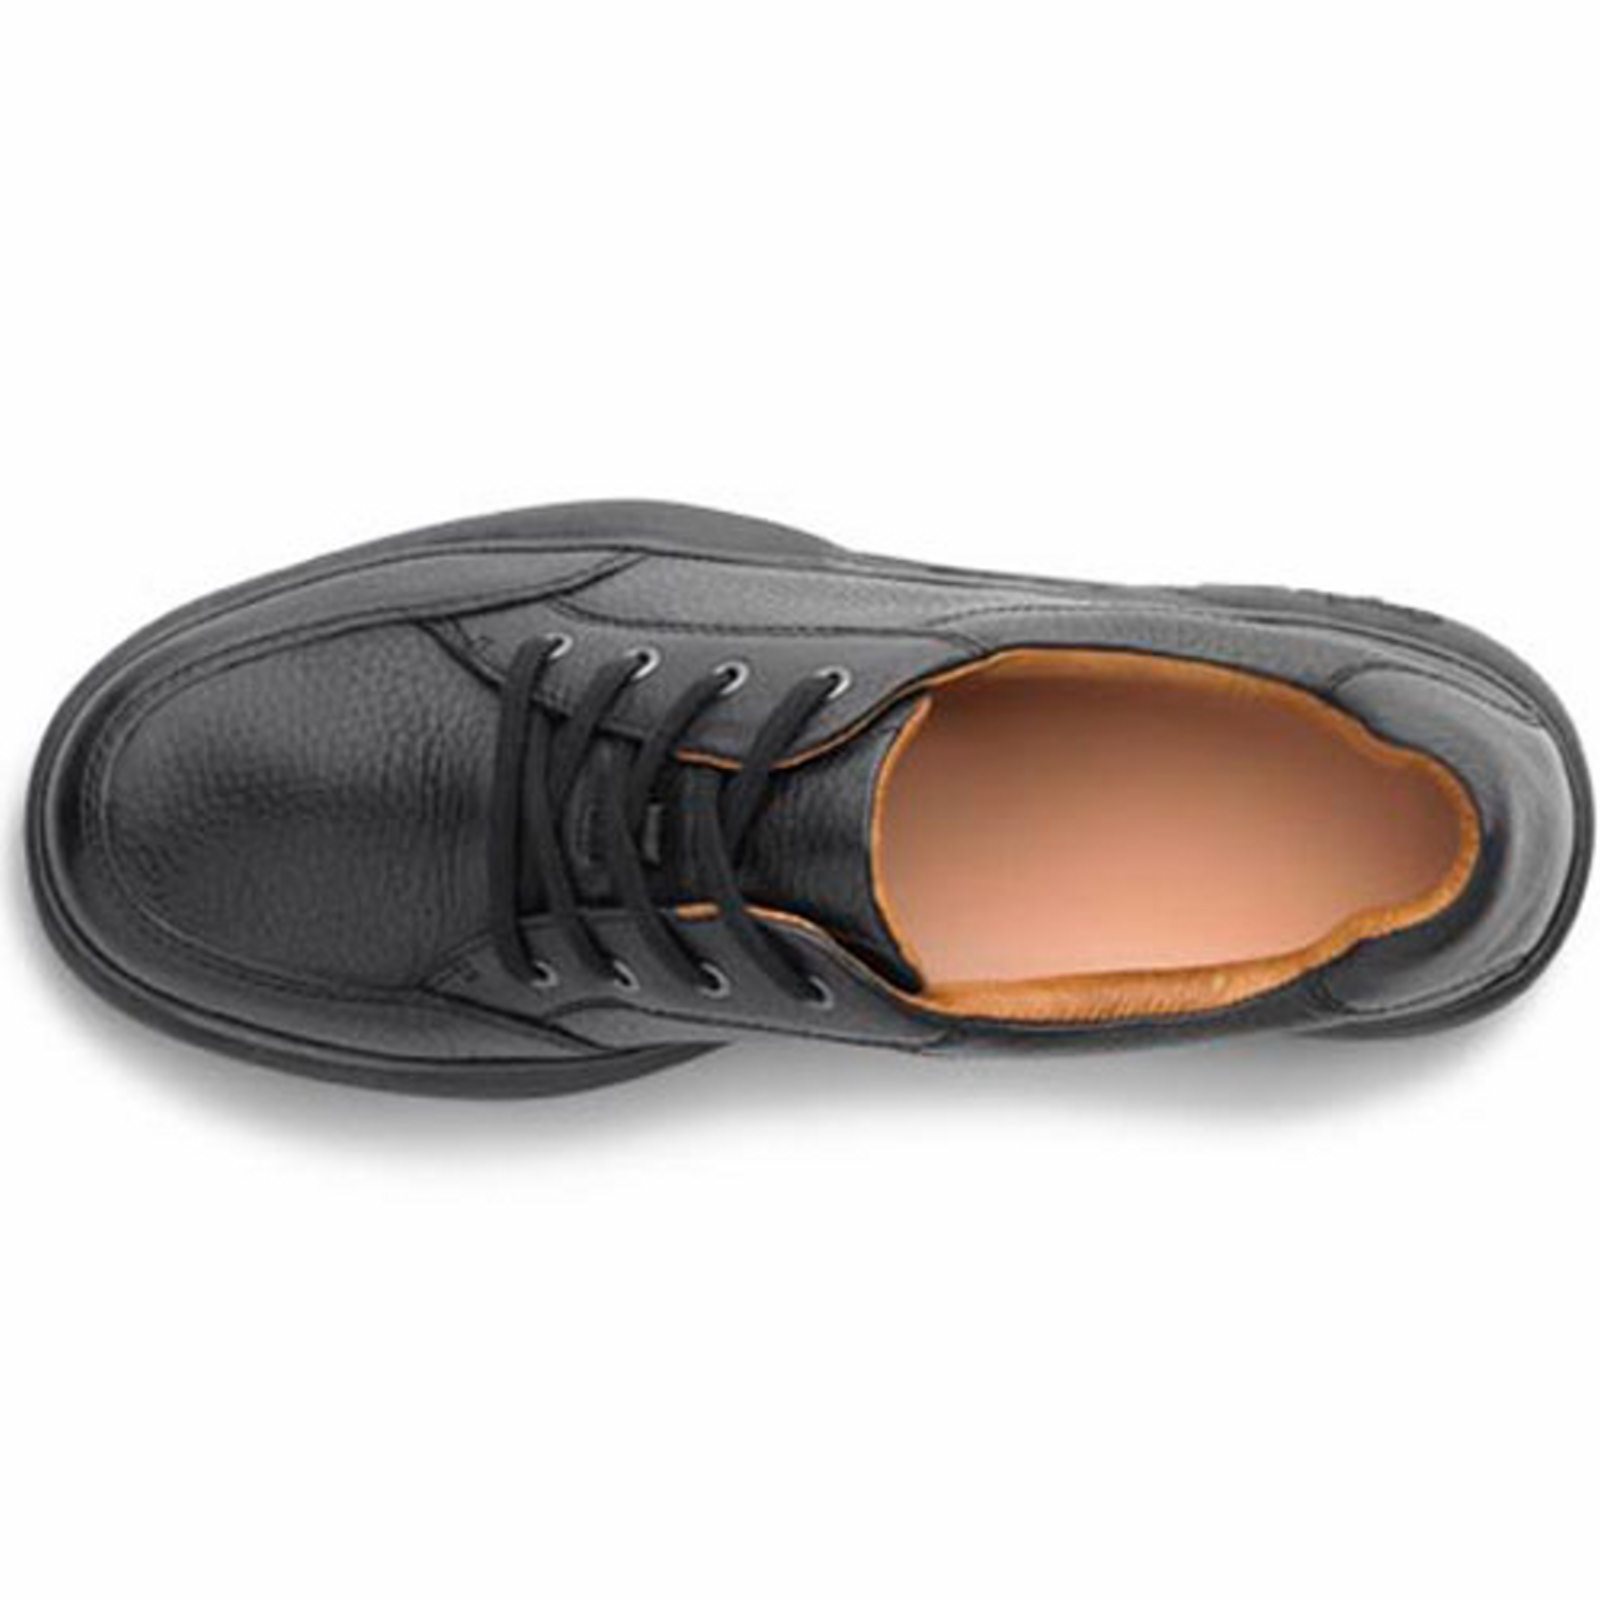 Dr. Comfort Justin Men's Casual Shoe: 8.5 Wide (E/2E) Black Lace - image 5 of 5